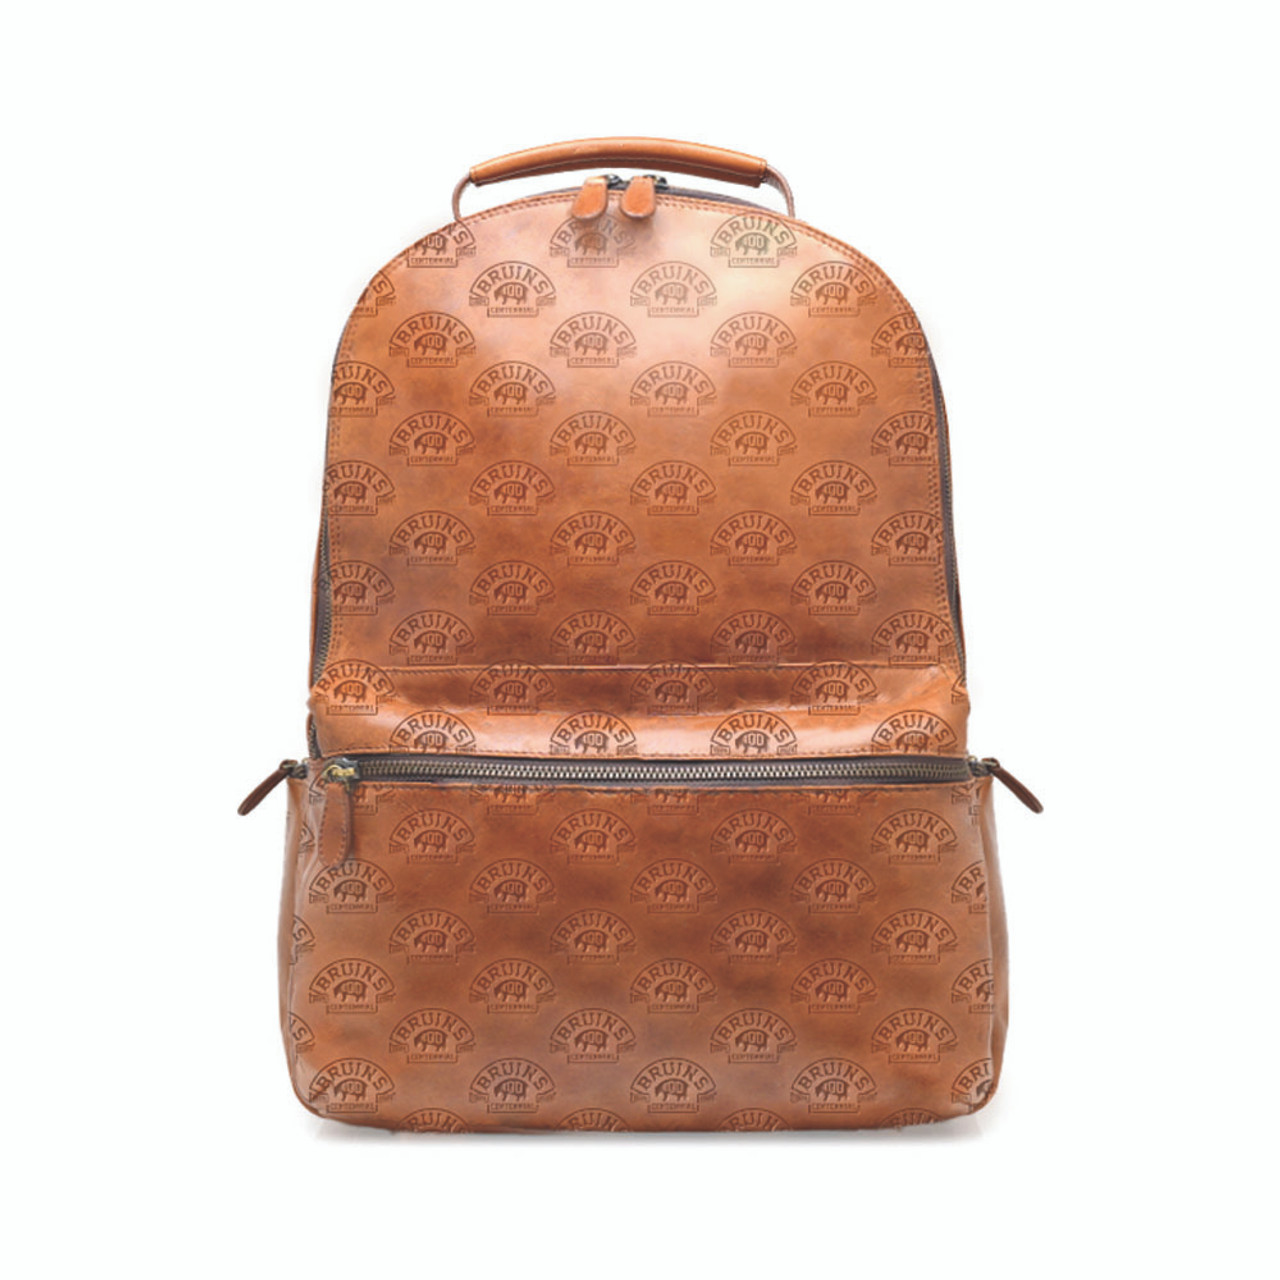 Fioretta Italian Genuine Leather Top Handle Backpack Handbag For Women - Tan  Brown | Women leather backpack, Italian leather handbags, Bags